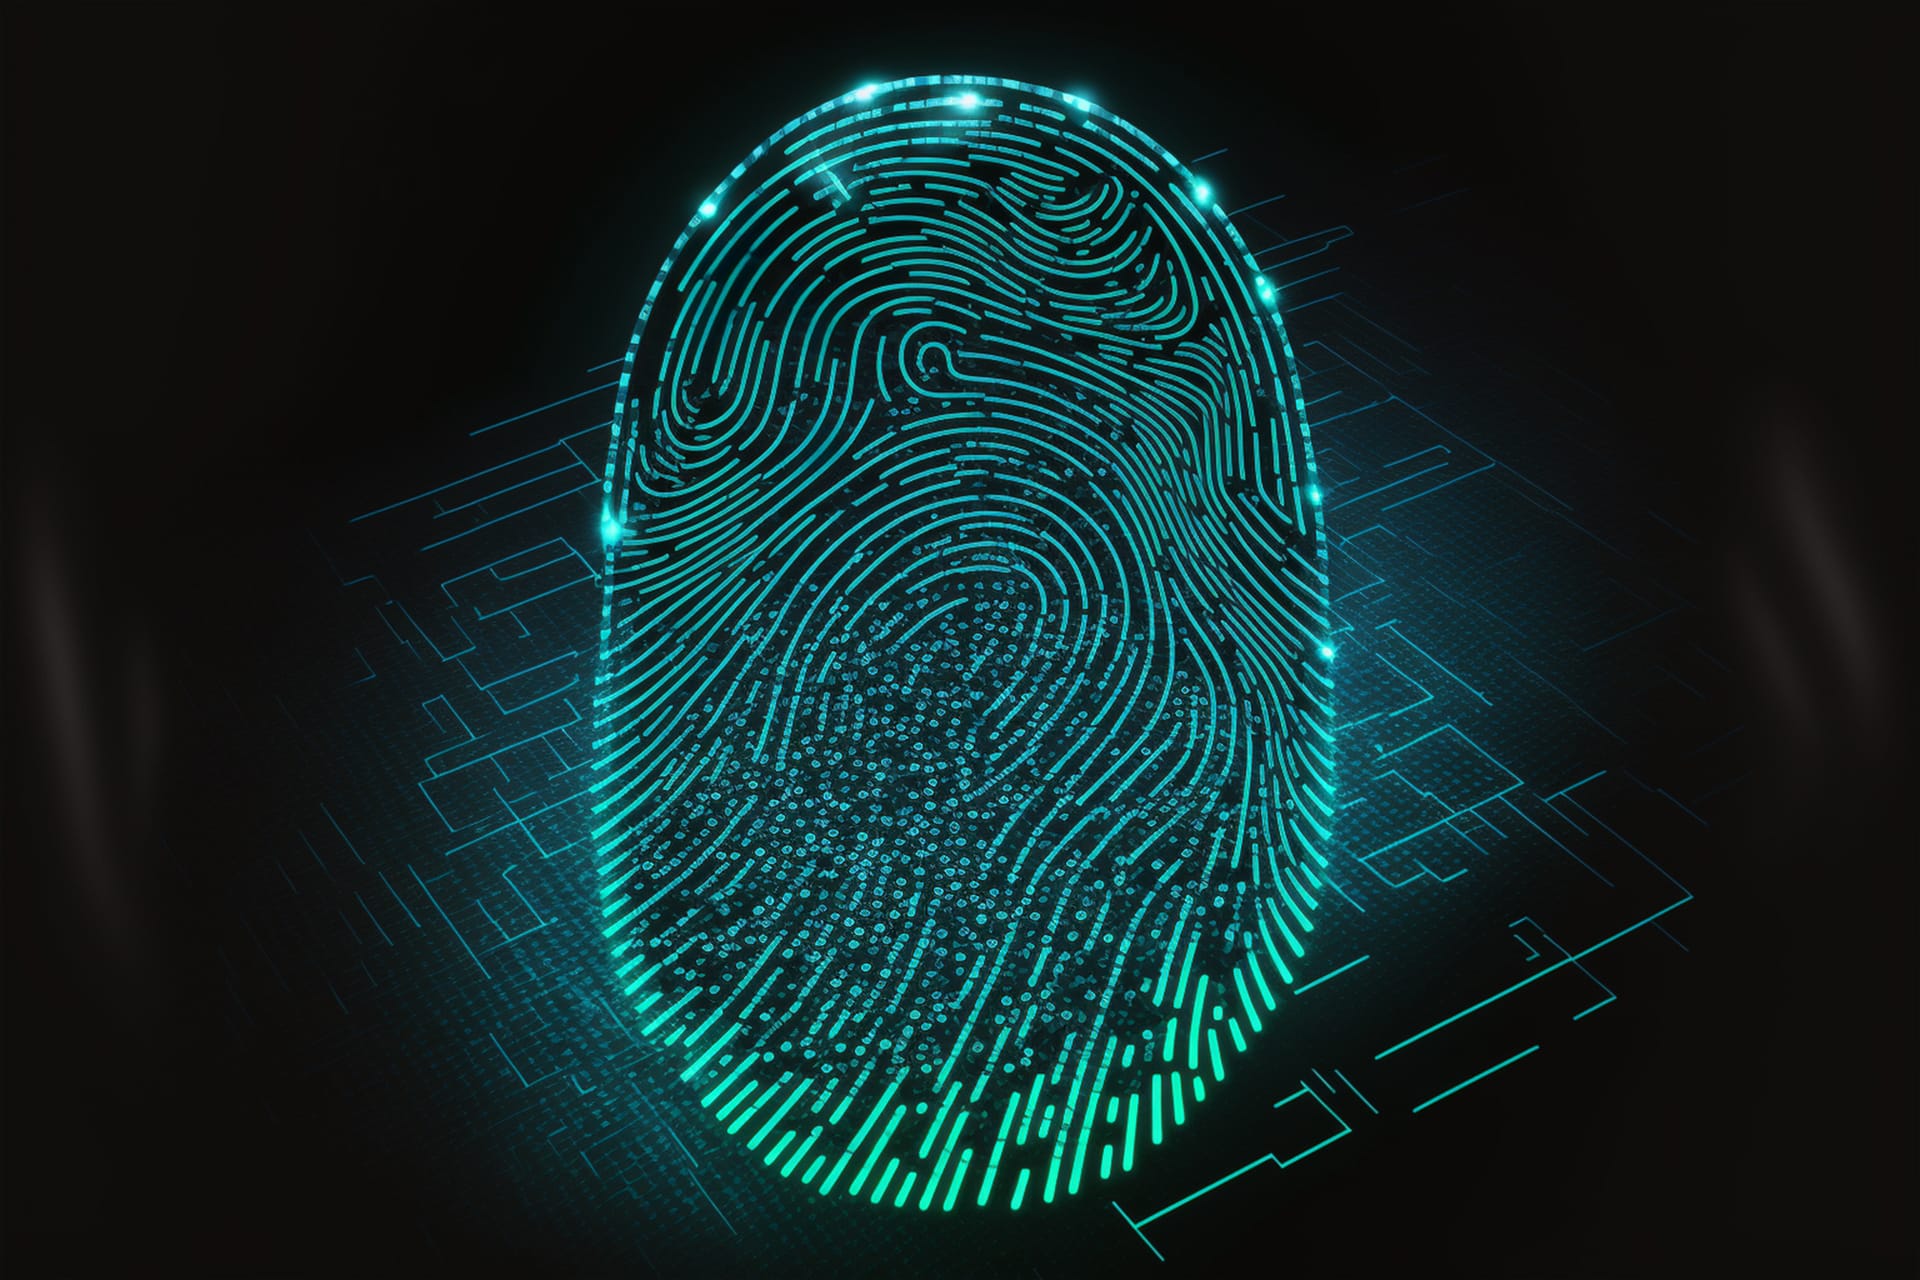 Fingerprint cyber security hologram virtual screenr